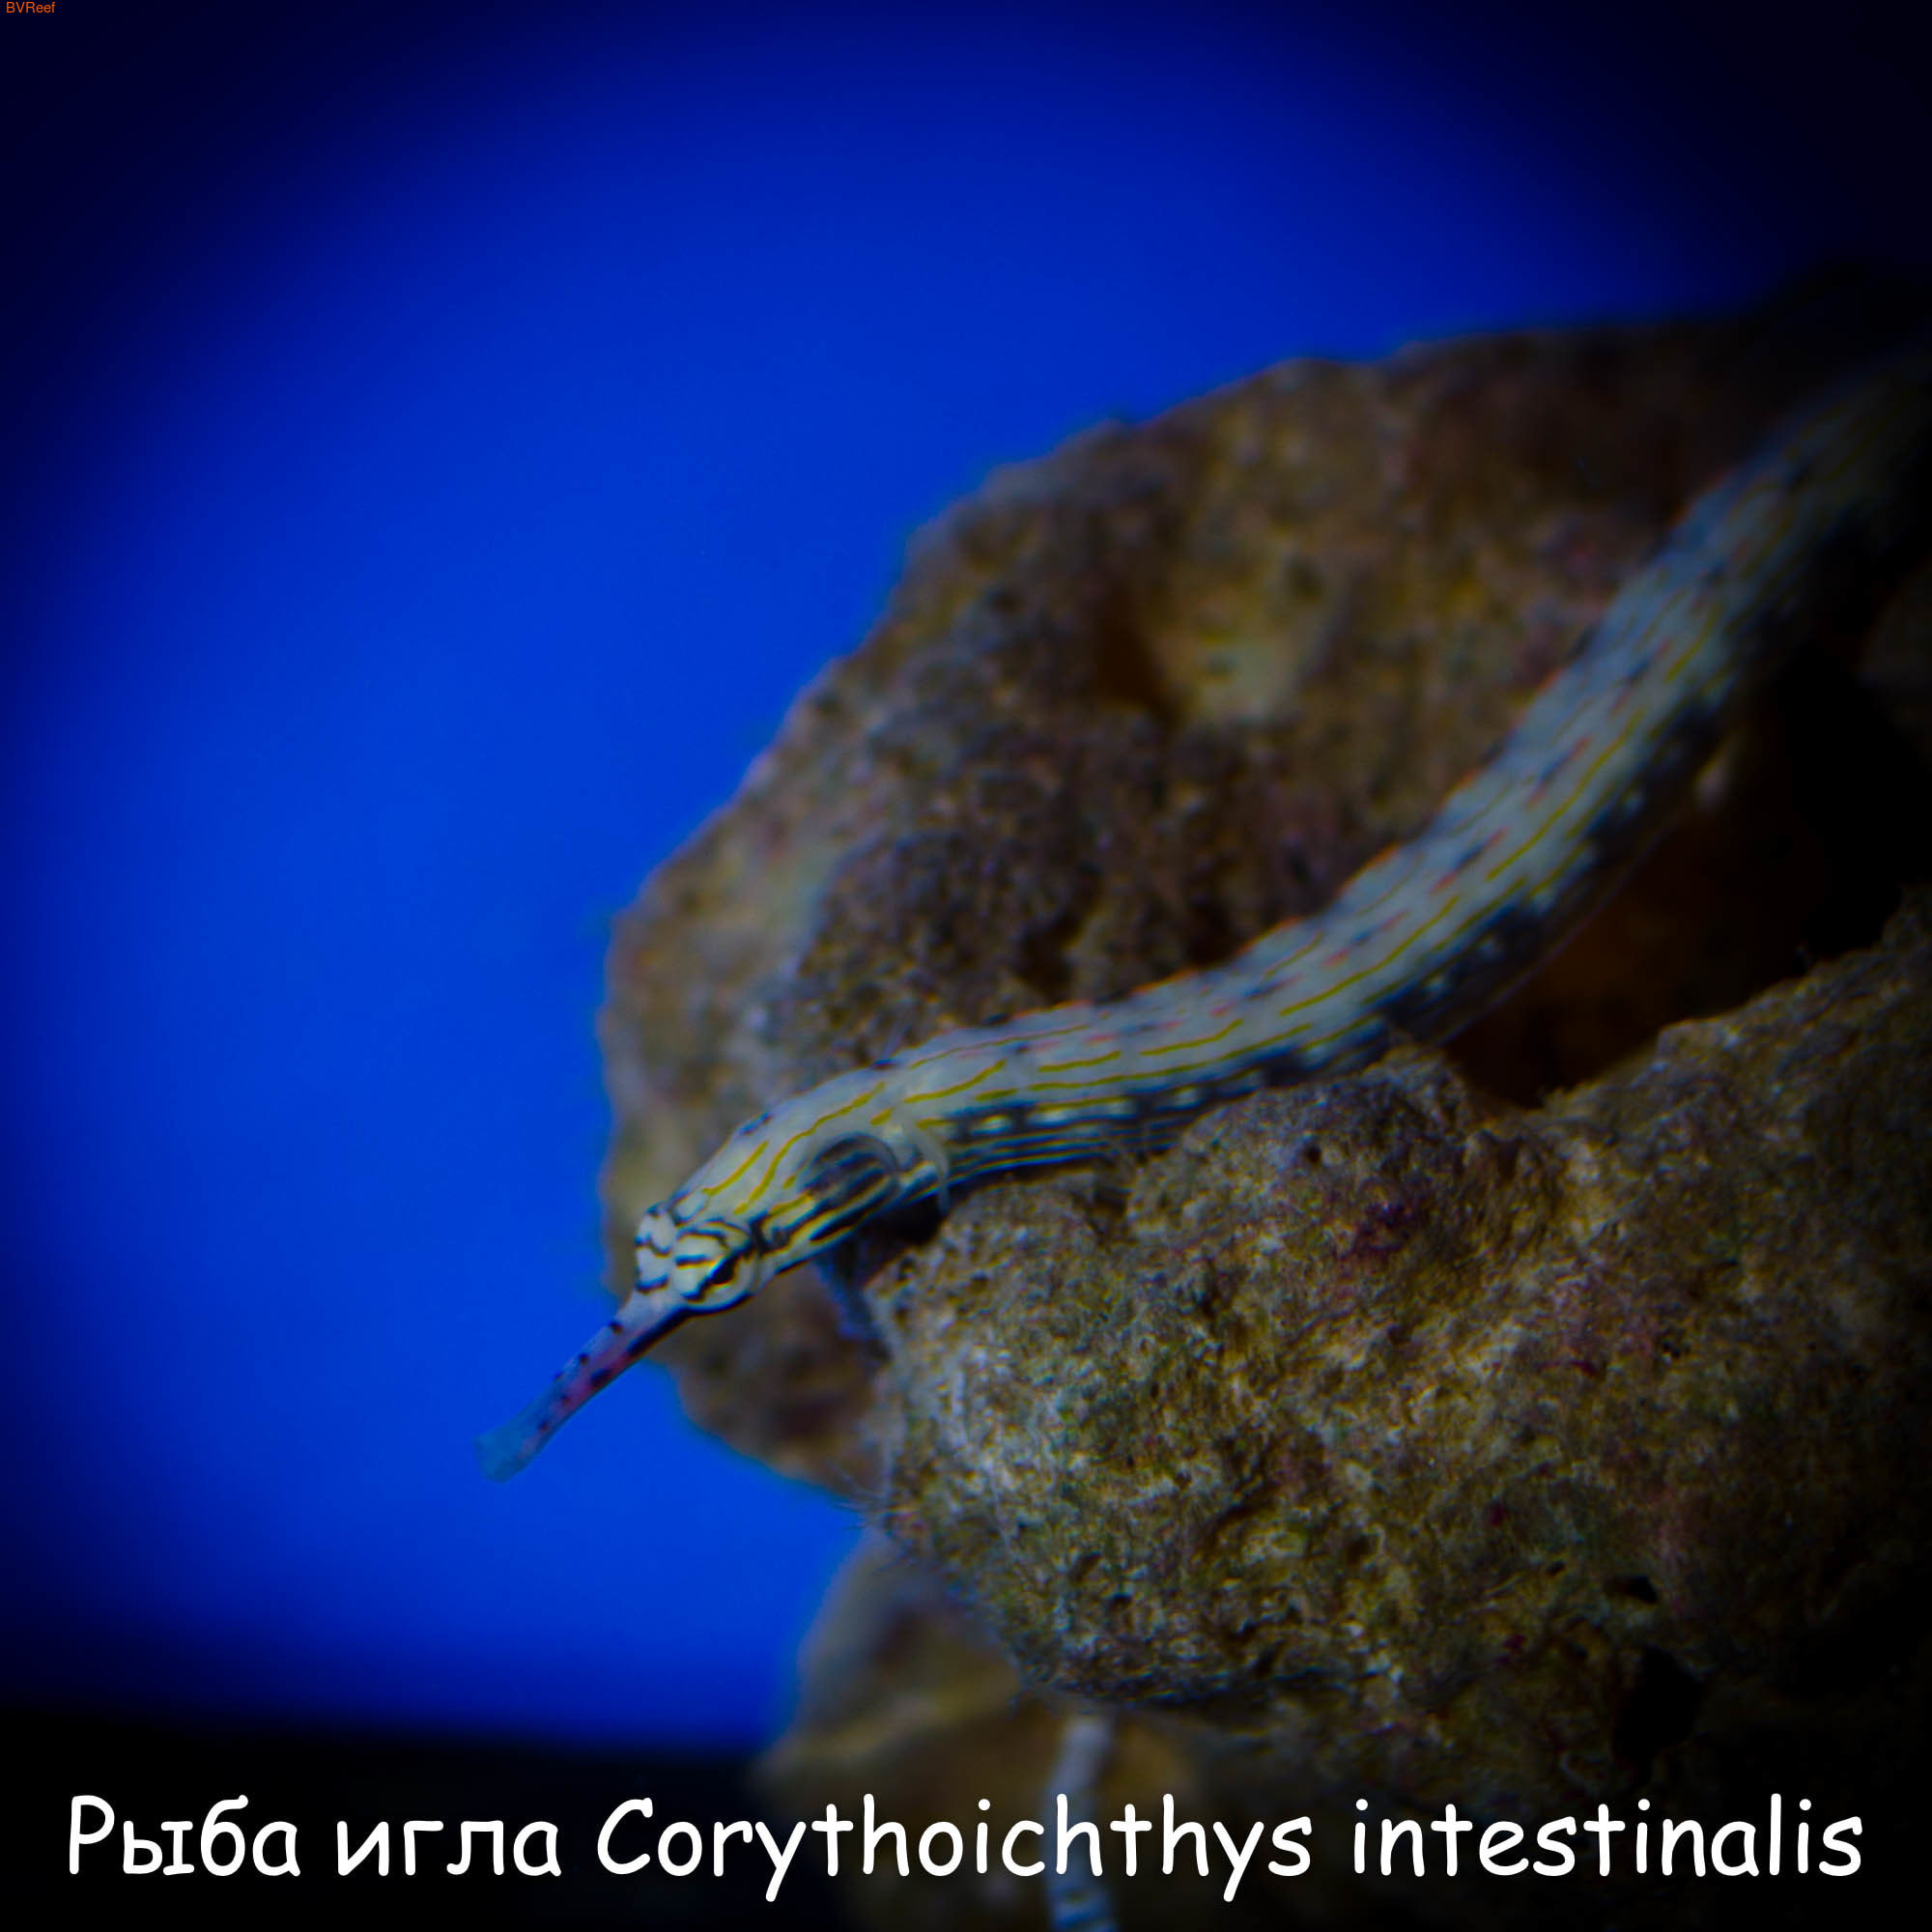   Corythoichthys intestinalis